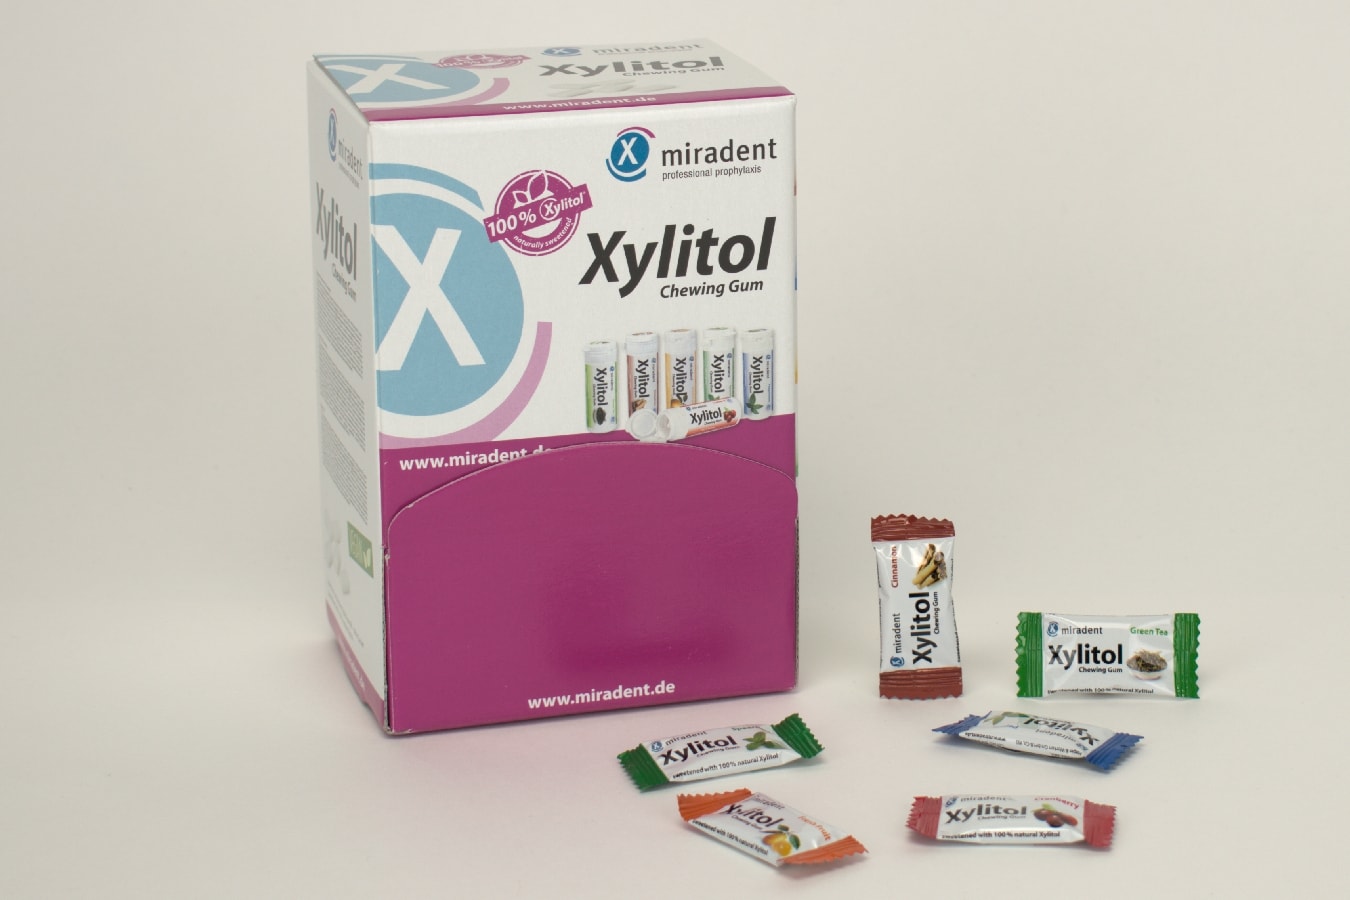 Miradent Xylitol Gum Sortiment 200st